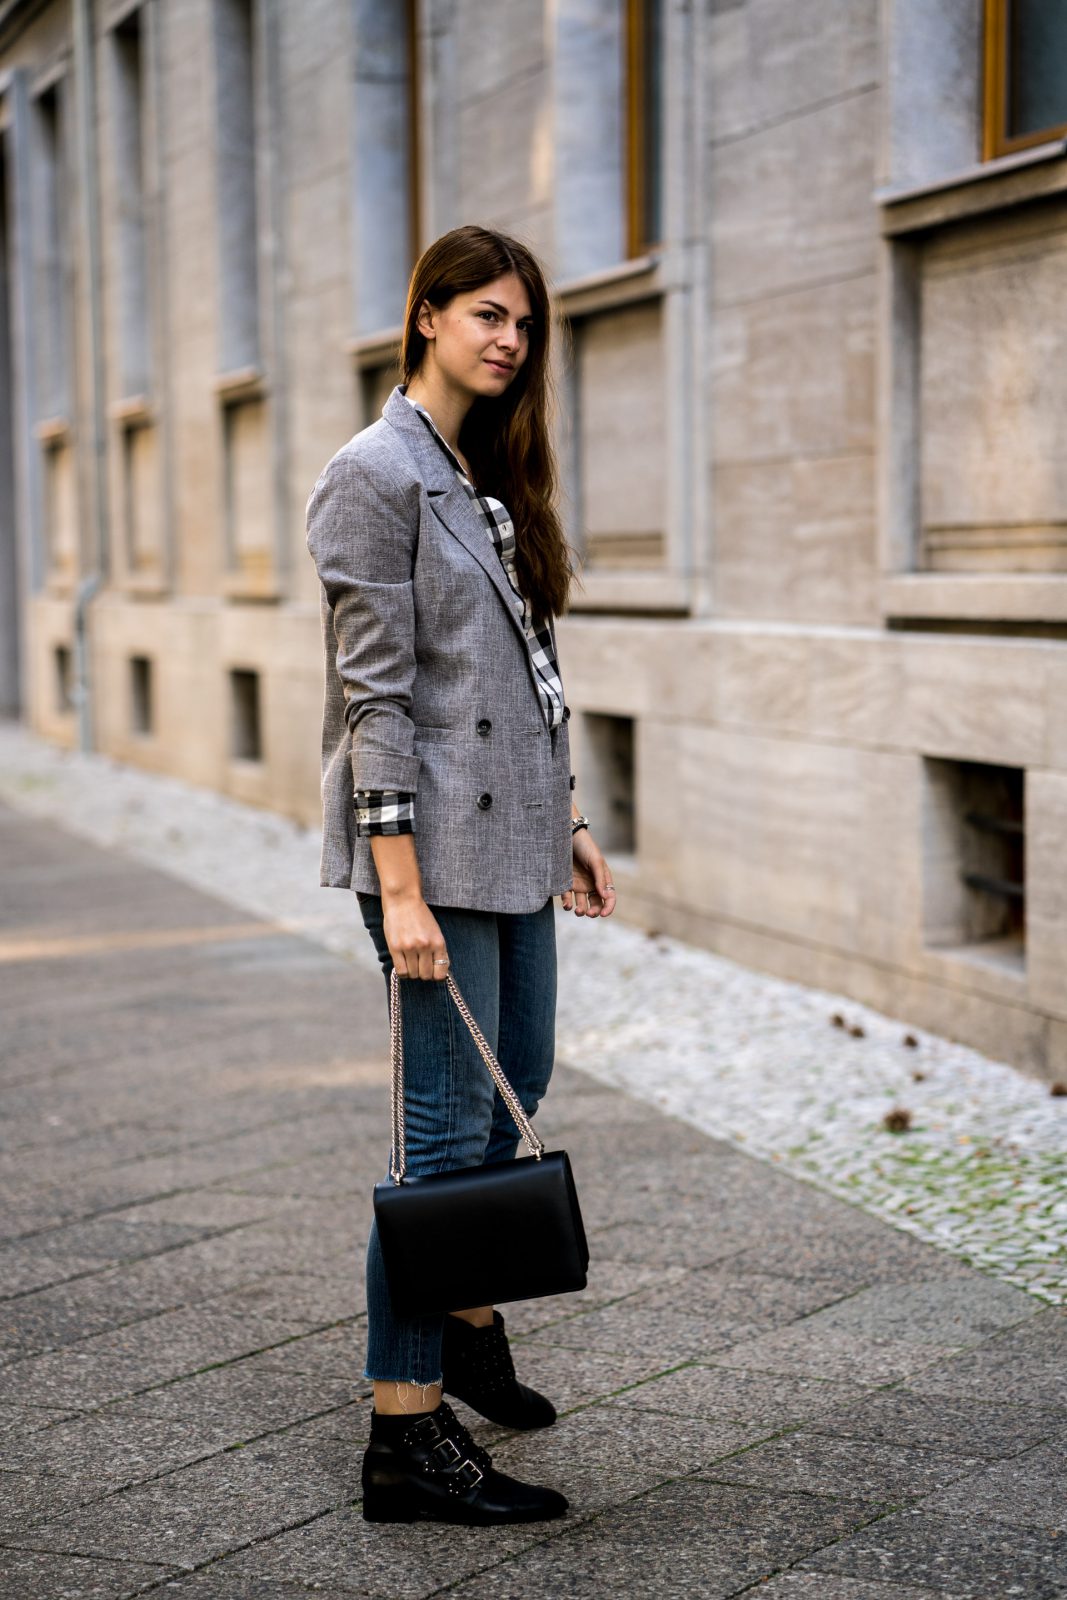 Combining a plaid shirt, blazer and denim || Fashionblog Berlin